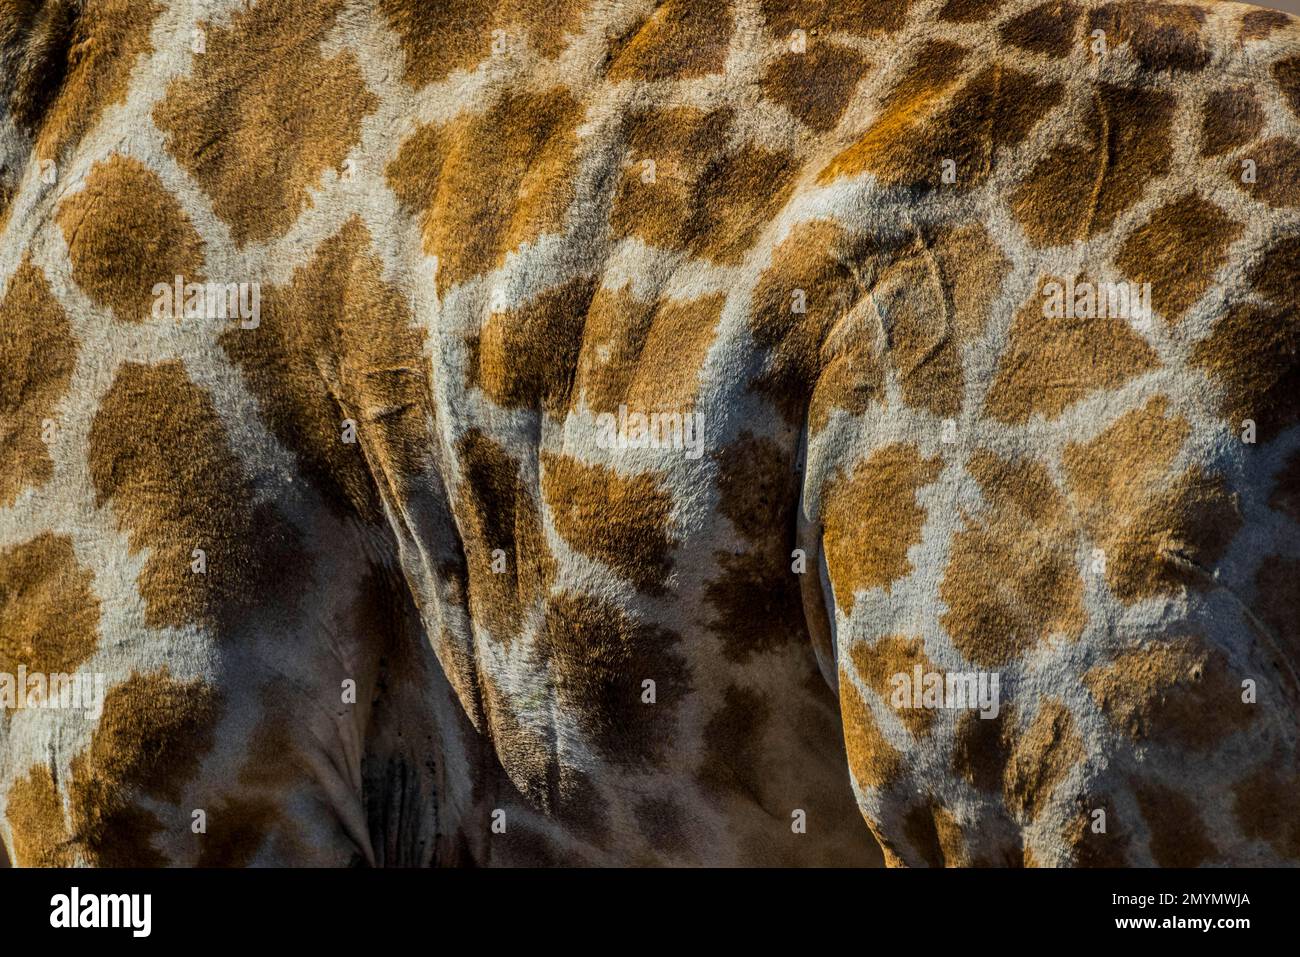 Angolan giraffe (Giraffa camelopardalis angolensis), fur markings, Etosha National Park, Namibia, Africa Stock Photo